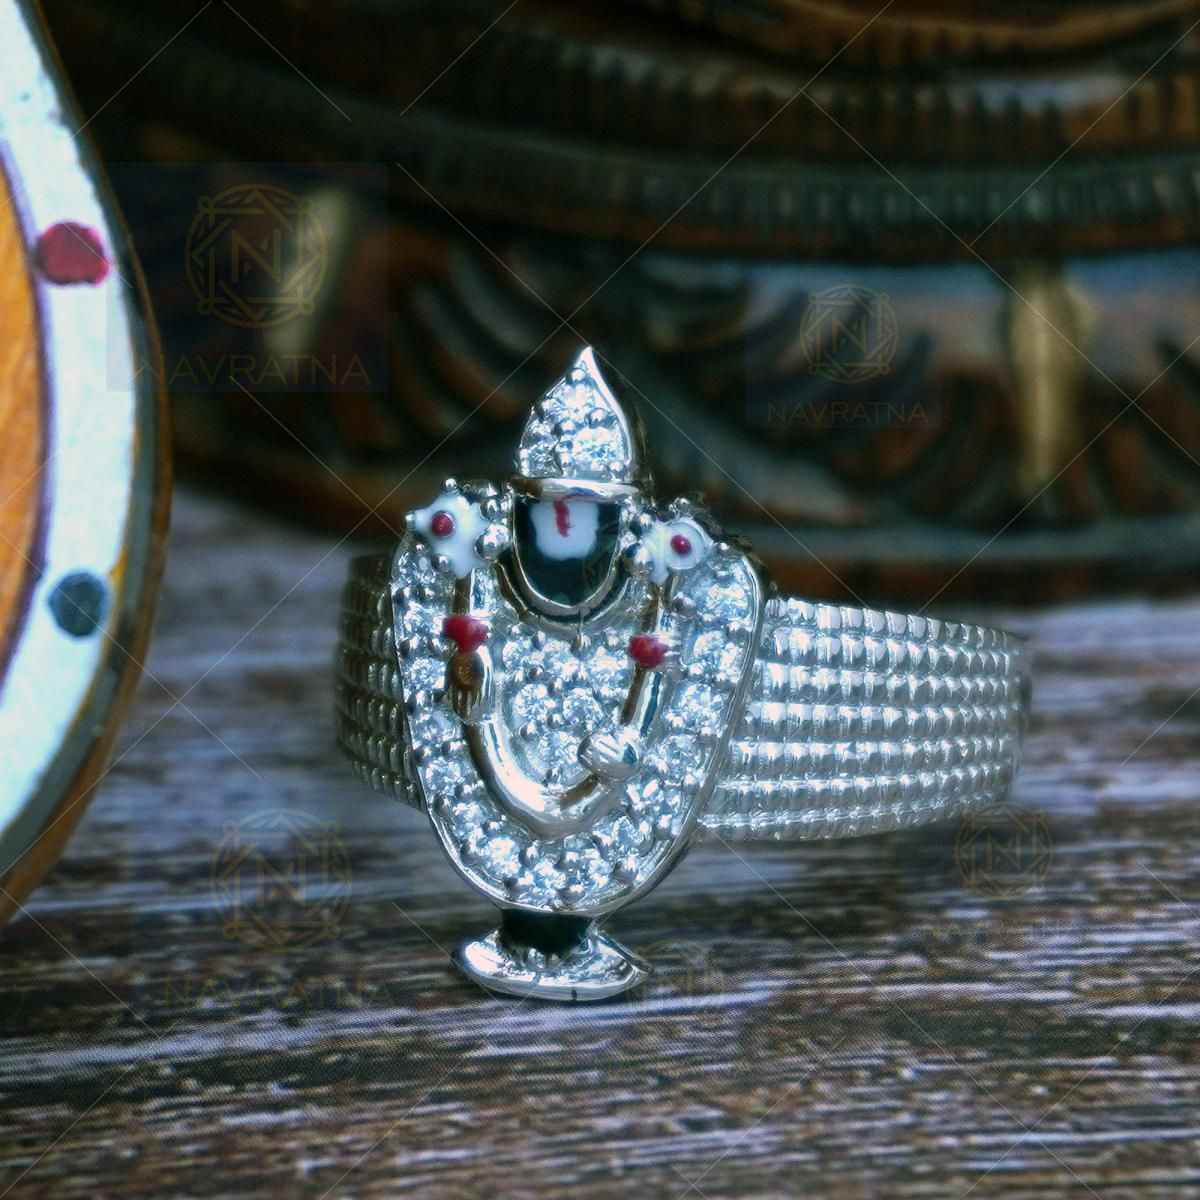 Morvi 24Kt Gold Layer Alloy, Round shape, Lord venkatesh, Tirupati balaji,  Heavy Superb Finish Stylish Fashion finger ring For Men and Women Brass Gold  Plated Ring Price in India - Buy Morvi